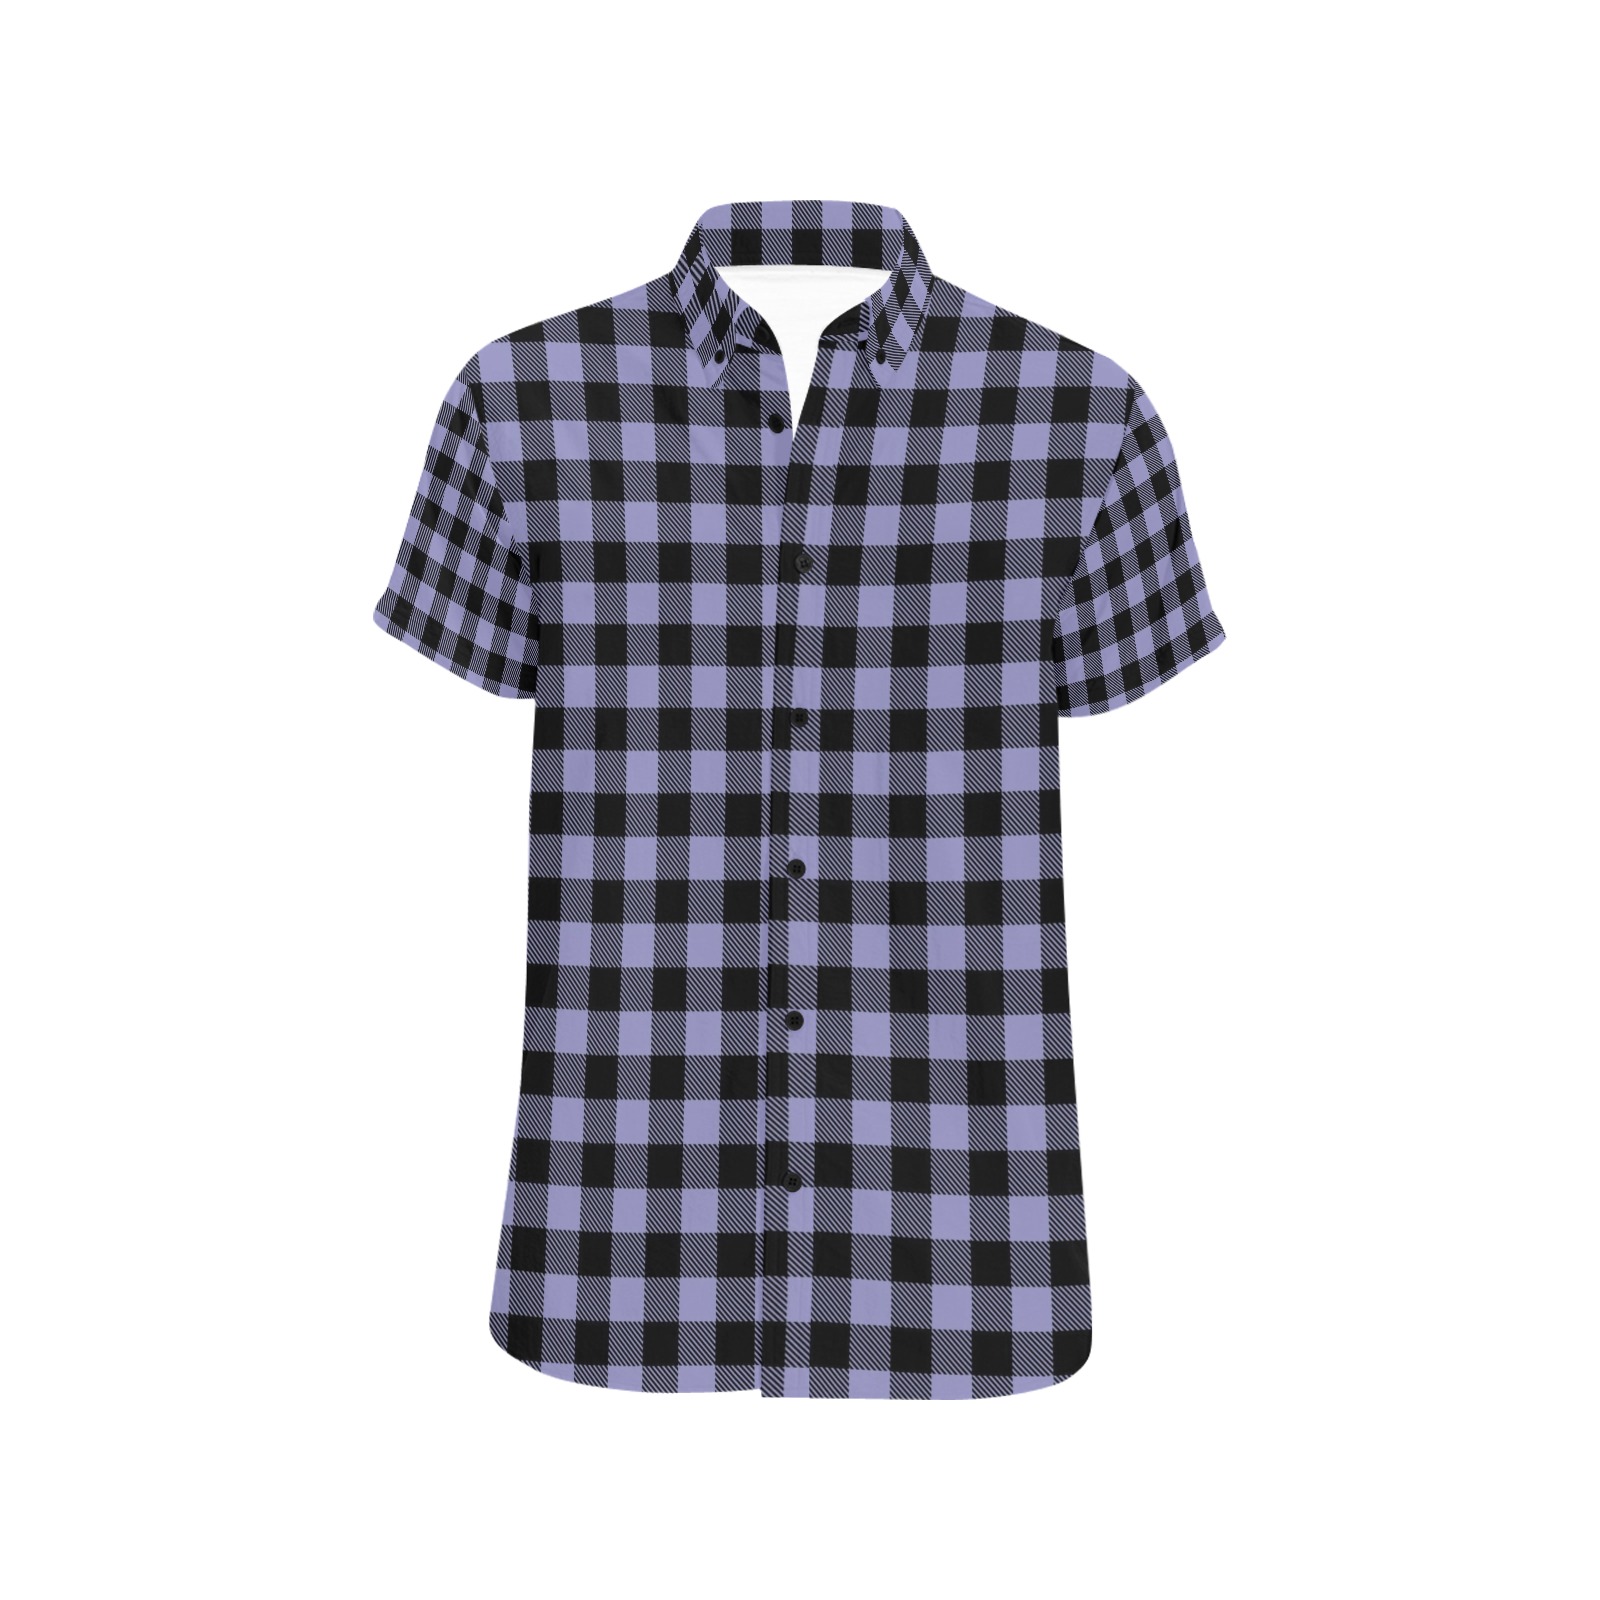 Buffalo Print - Gray and Black Men's All Over Print Short Sleeve Shirt (Model T53)